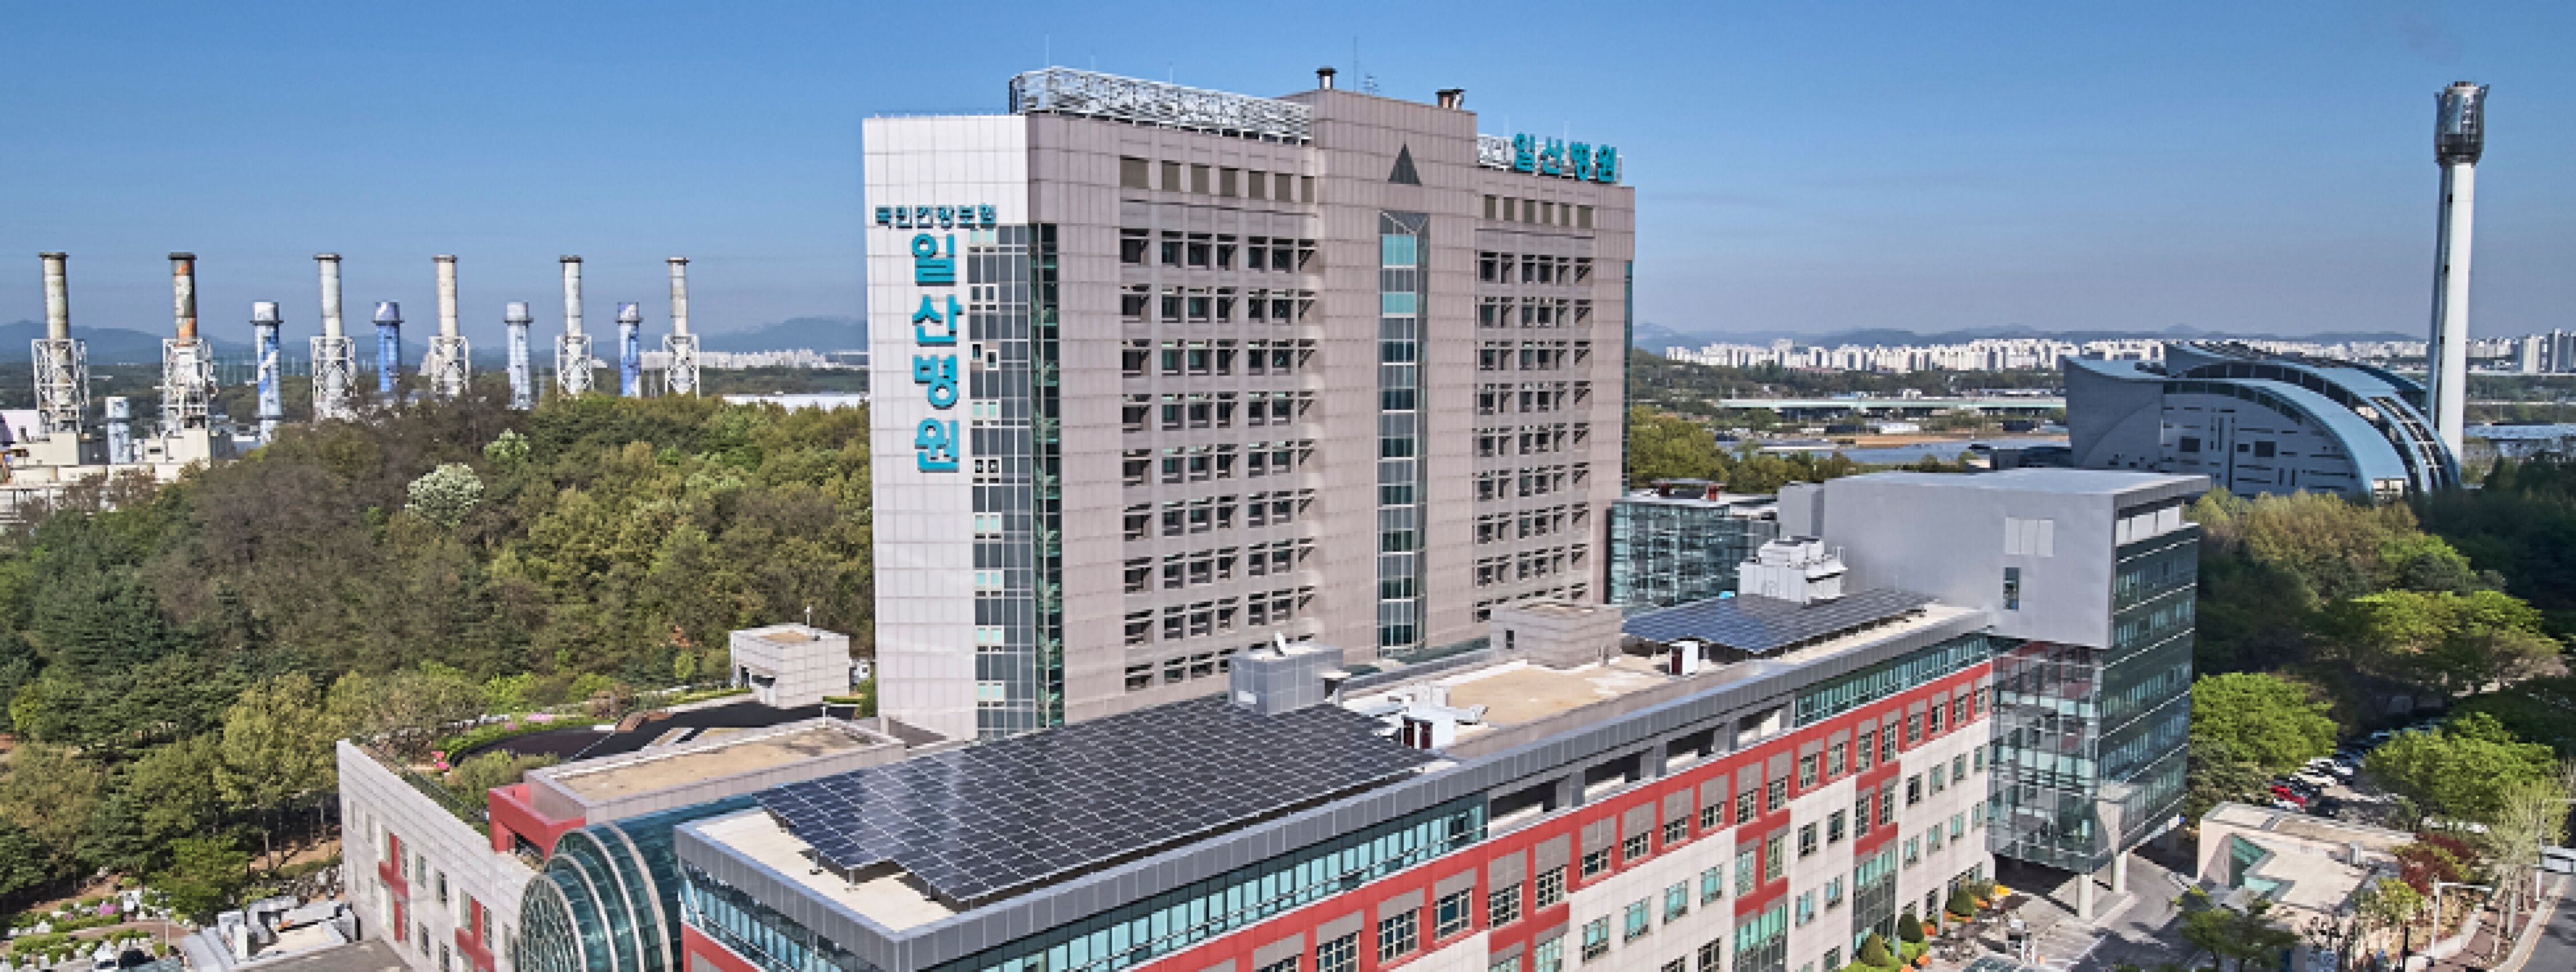 Ilsan hospital, South Korea